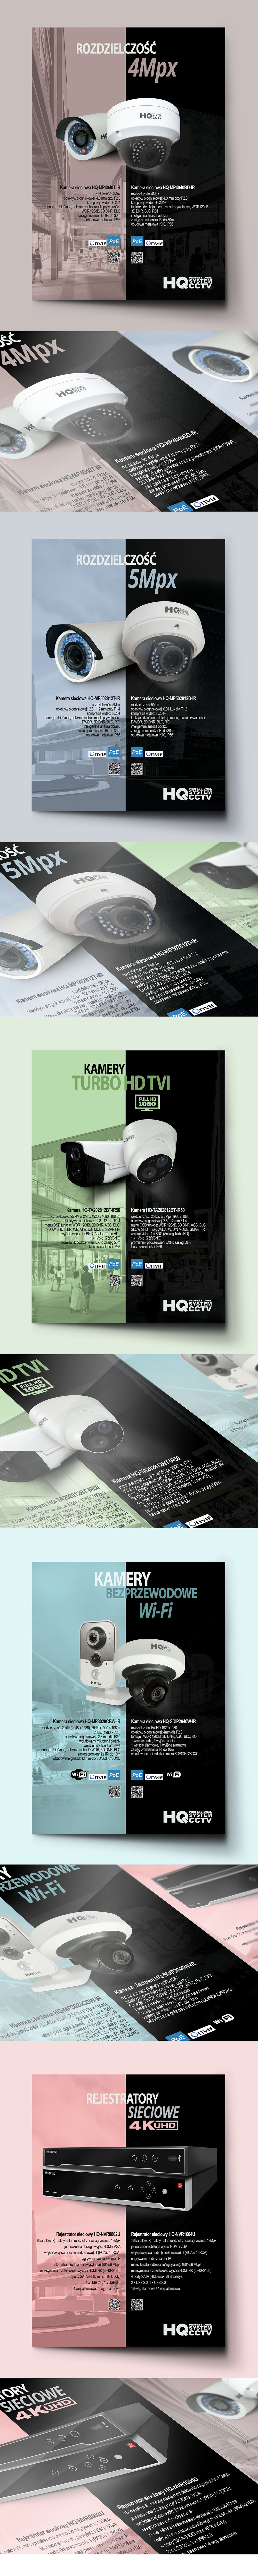 CCTV camera IP fullHD HD poster posters typo